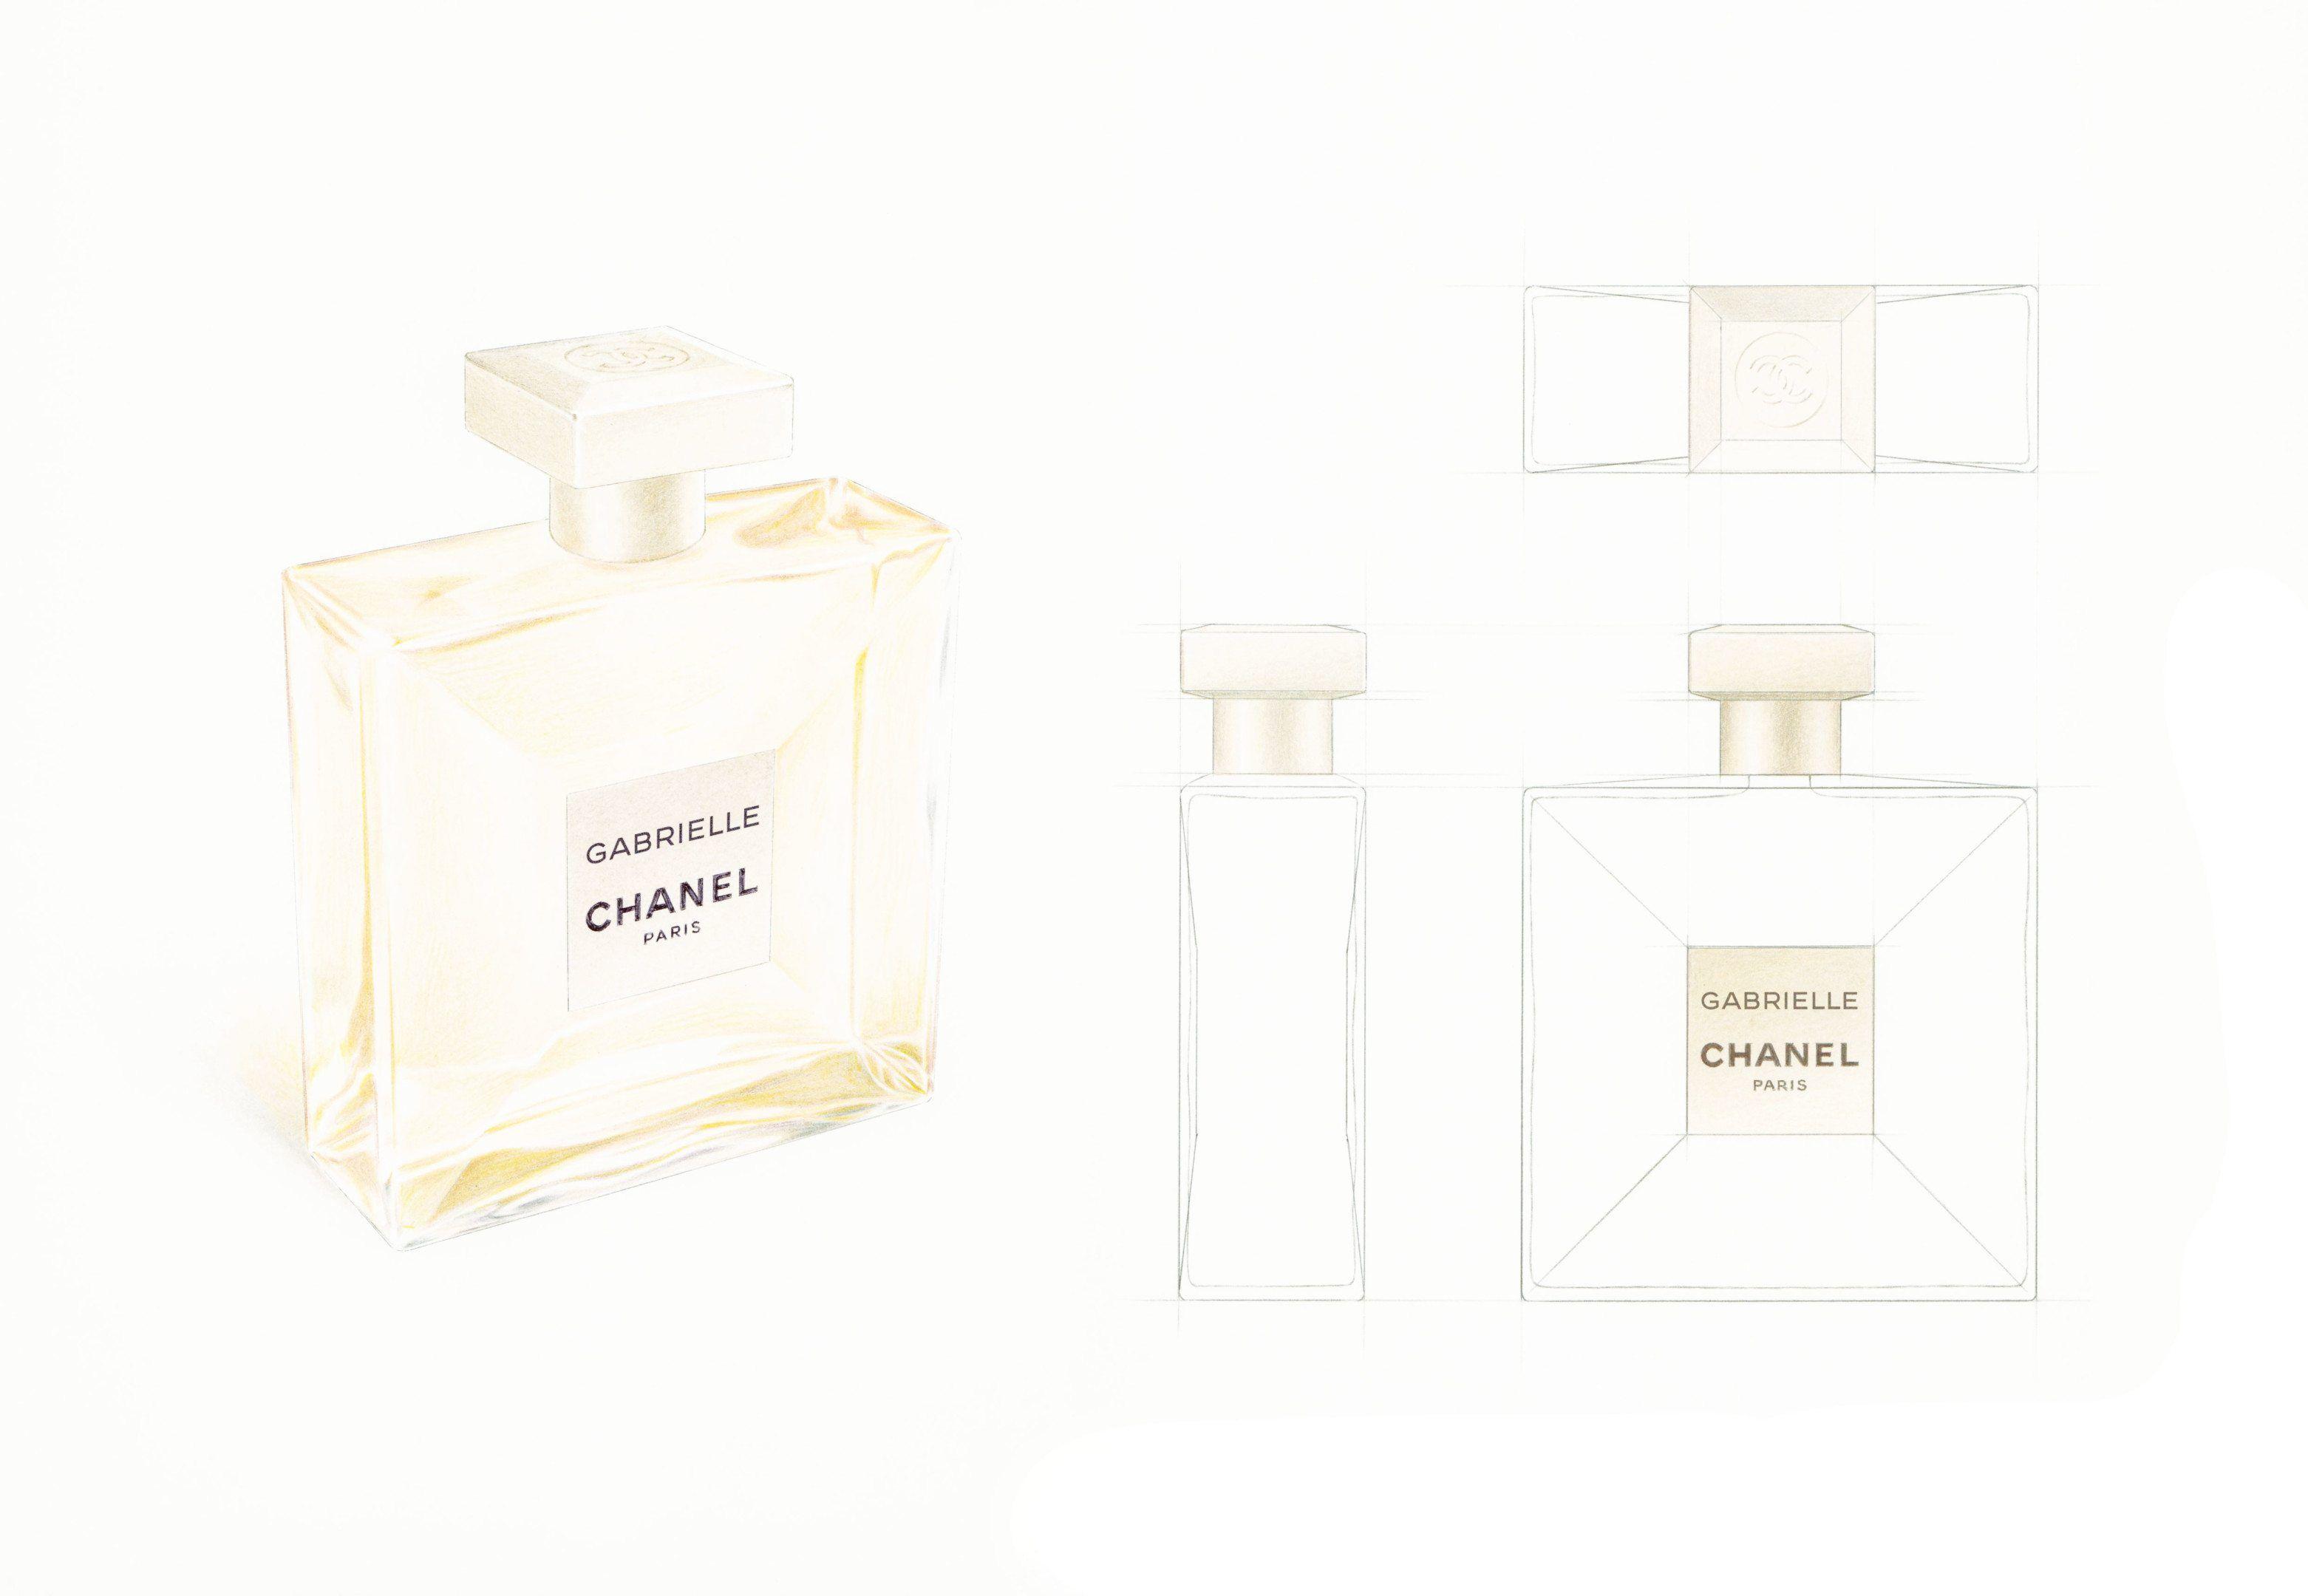 Gabrielle Chanel Paris Logo - Meet Gabrielle, Chanel's Latest Fragrance - FASHION Magazine